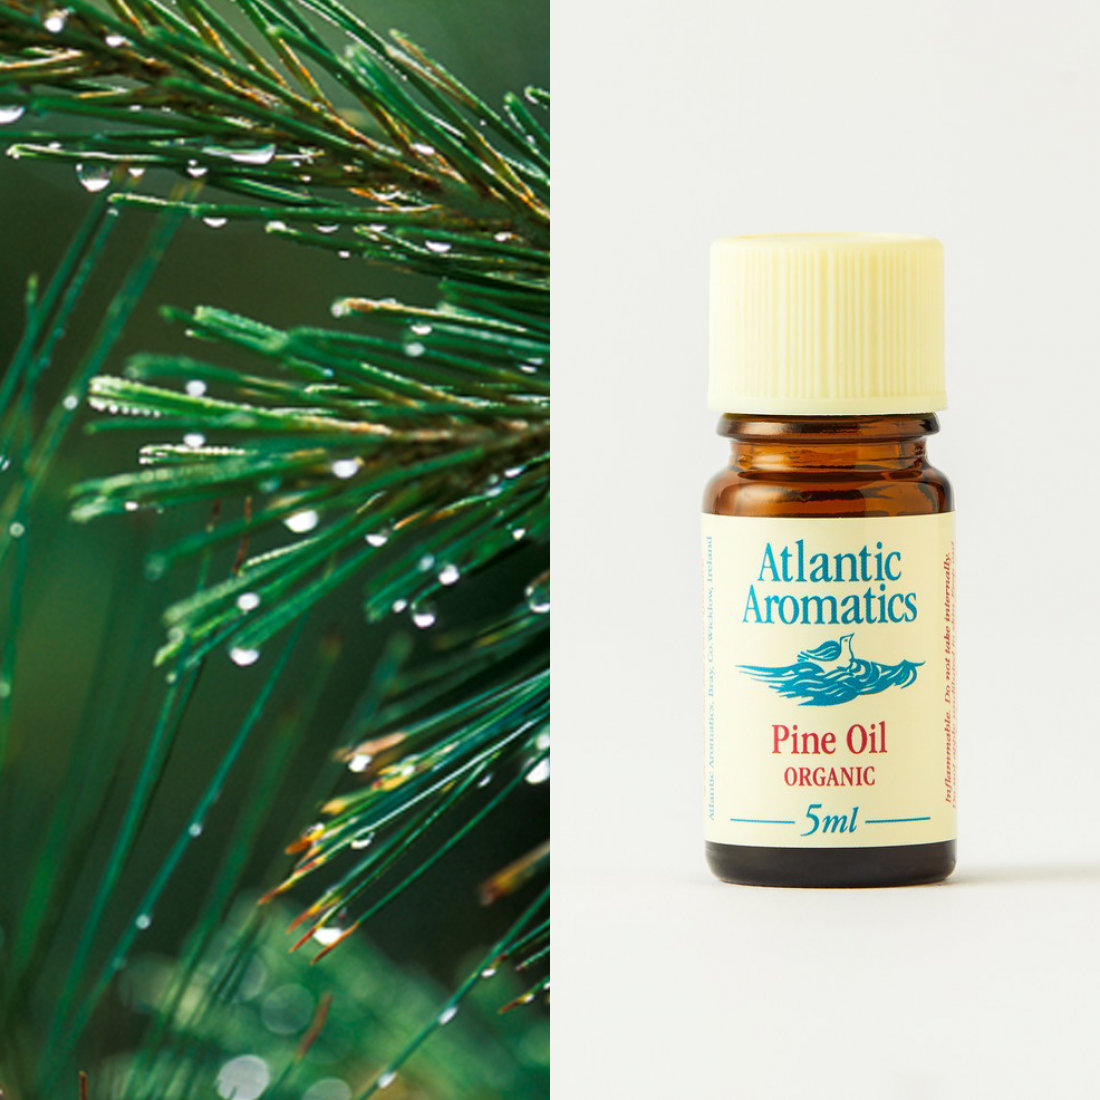 Atlantic Aromatics Pine Oil Organic 5ml